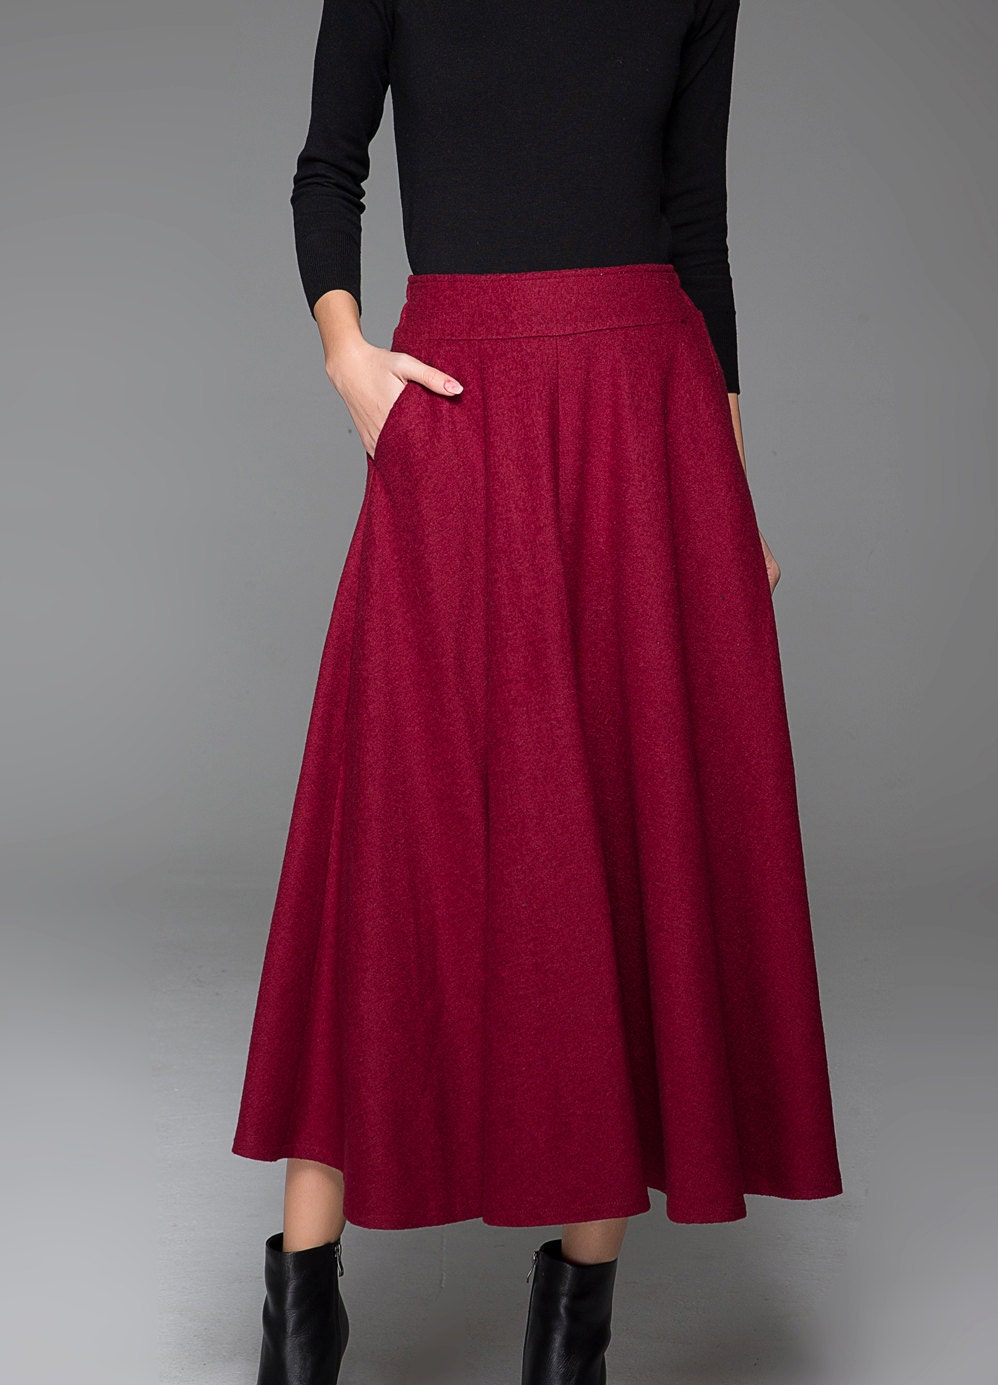 Red Wool Skirt Classic Smart Elegant Winter Warm Maxi Long